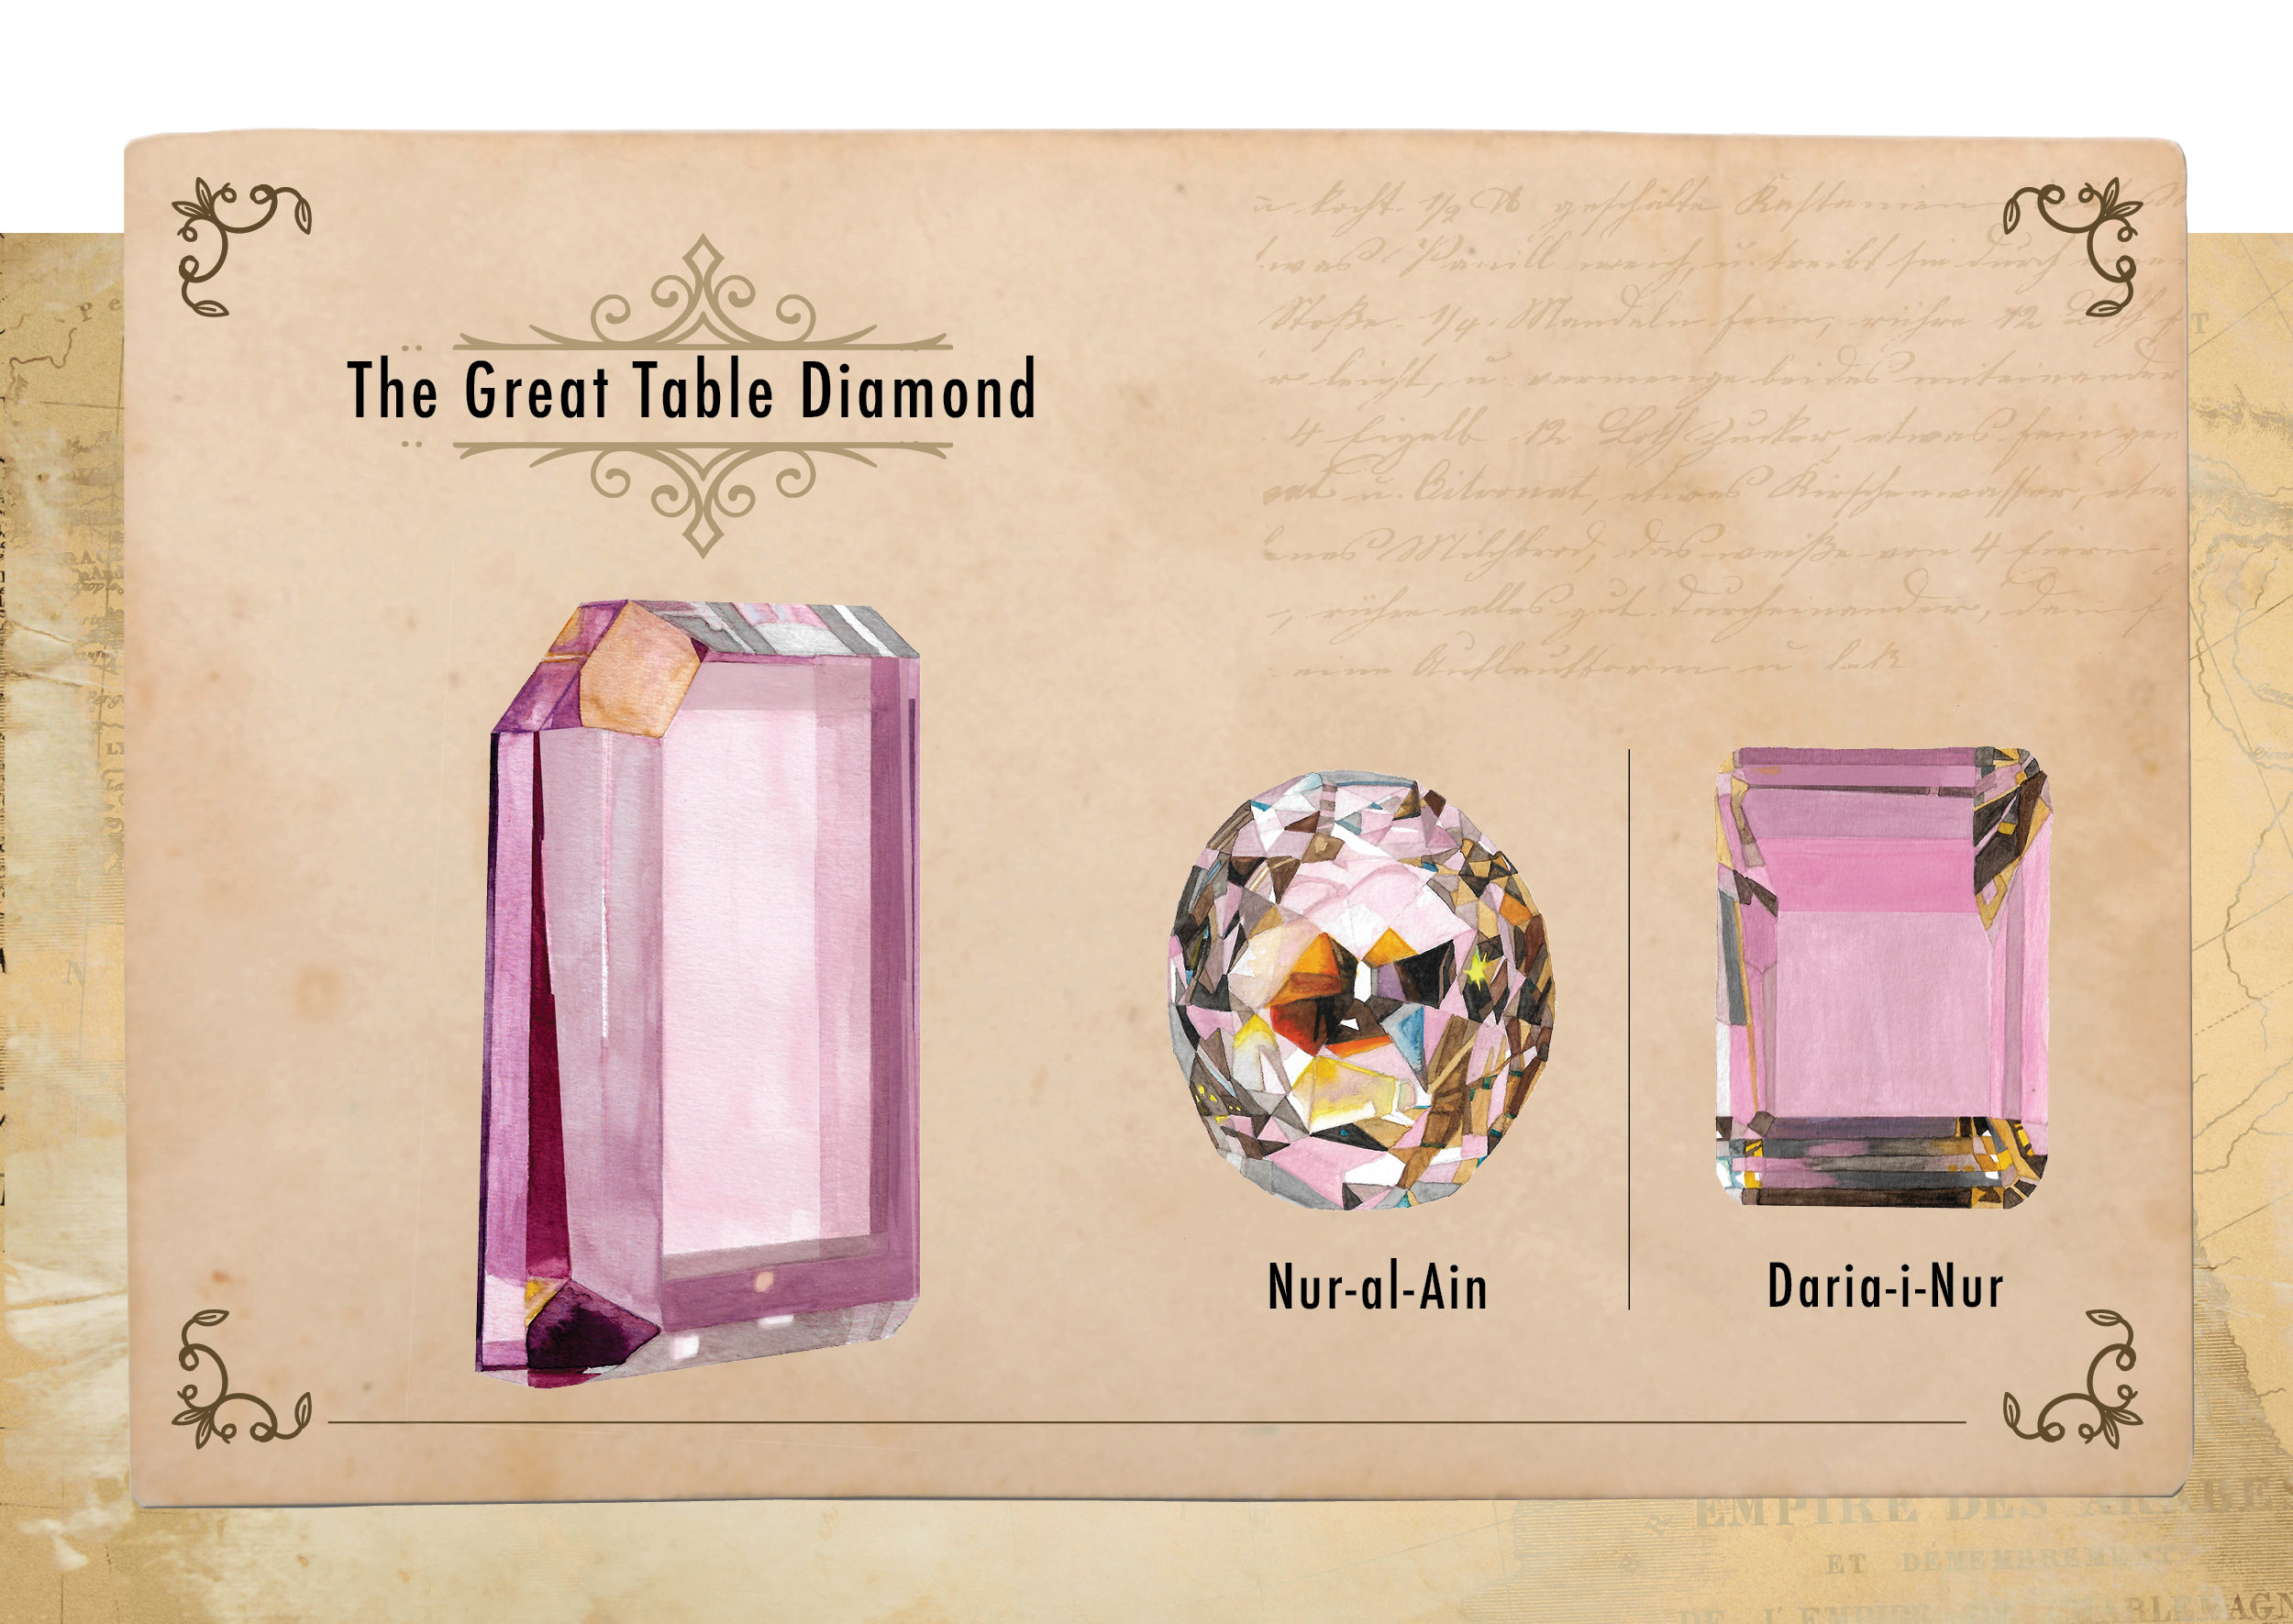 The Great Table Diamond, Nur-al-Ain, and Daria-i-nur: Radiant Jewels of Distinction 